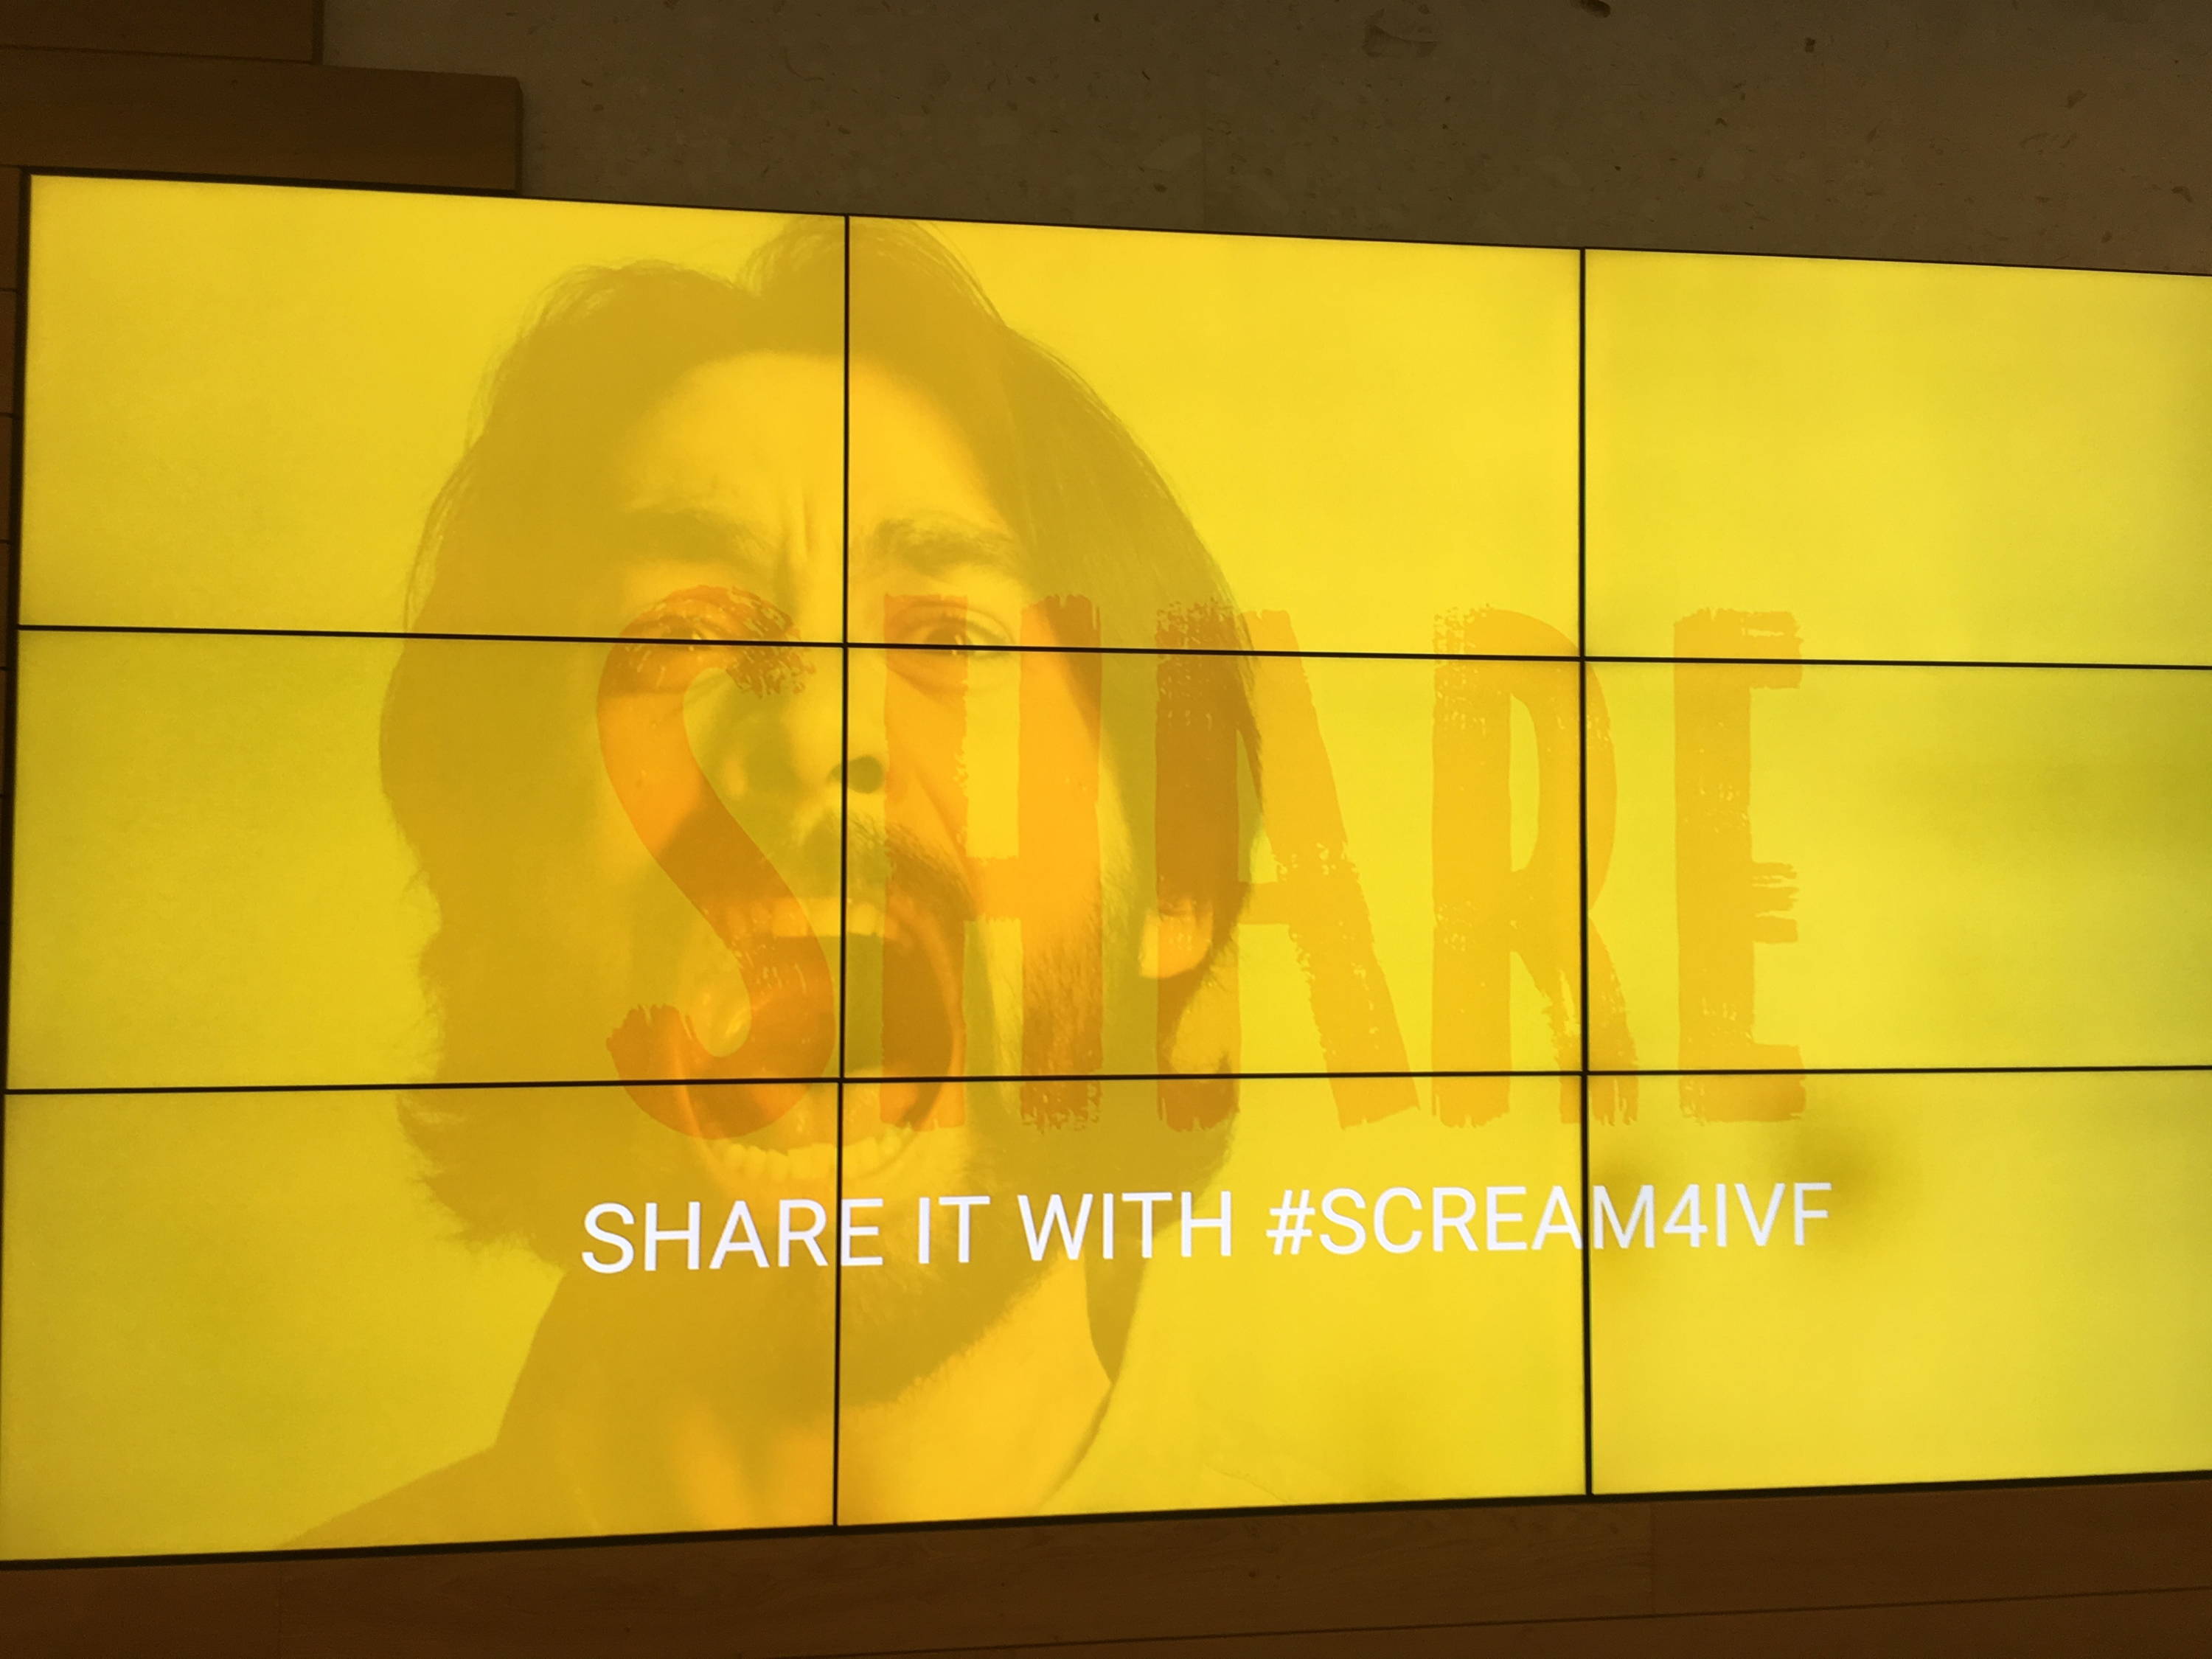 Scream Share It With #Scream4IVF